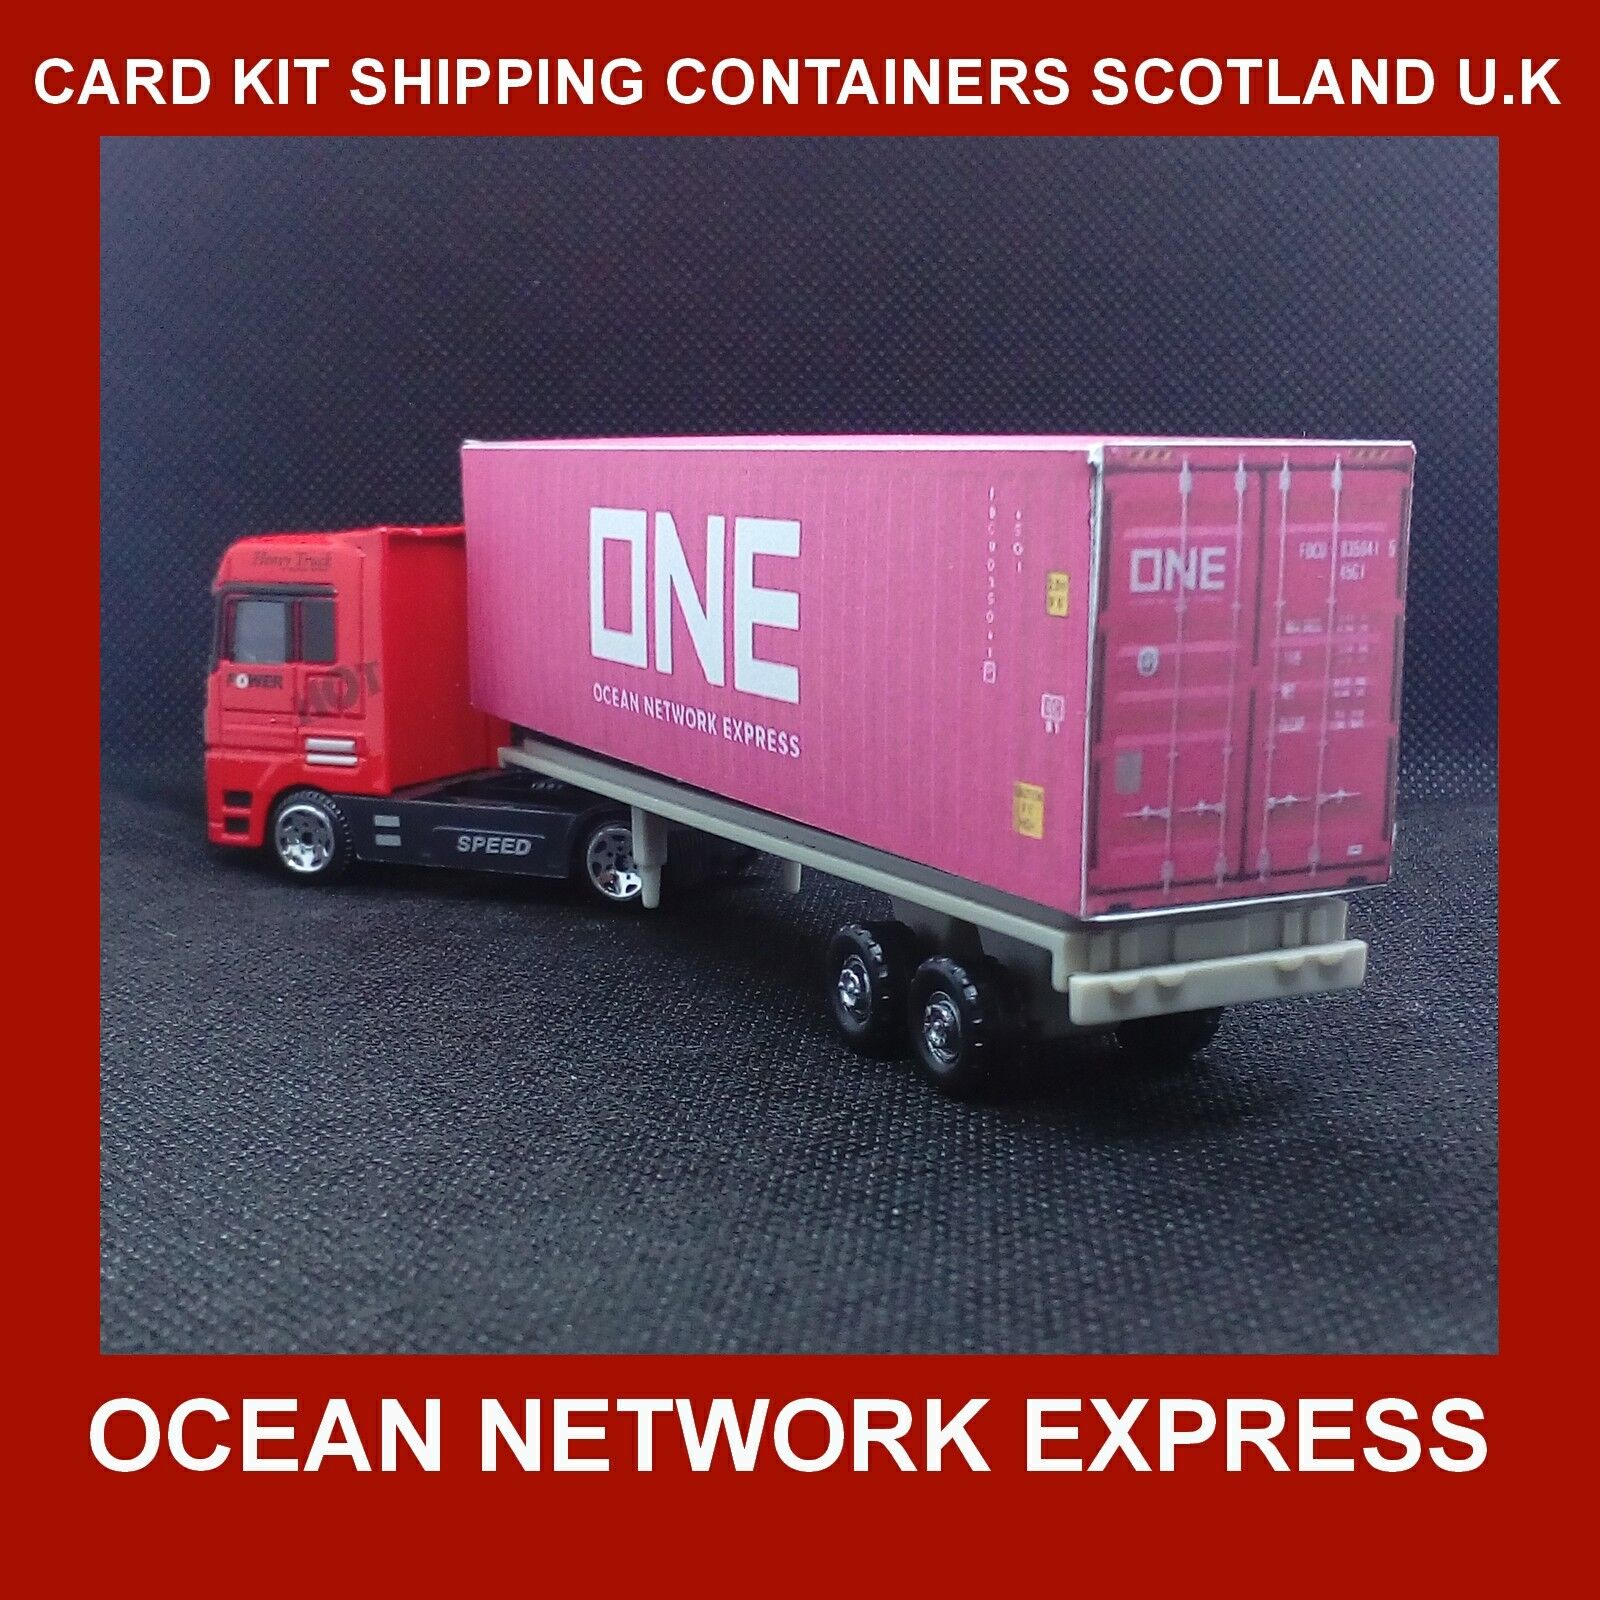 ONE Ocean Network Express 40ft x 4 Buy Now & FREE 20ft HO Gauge 1:87